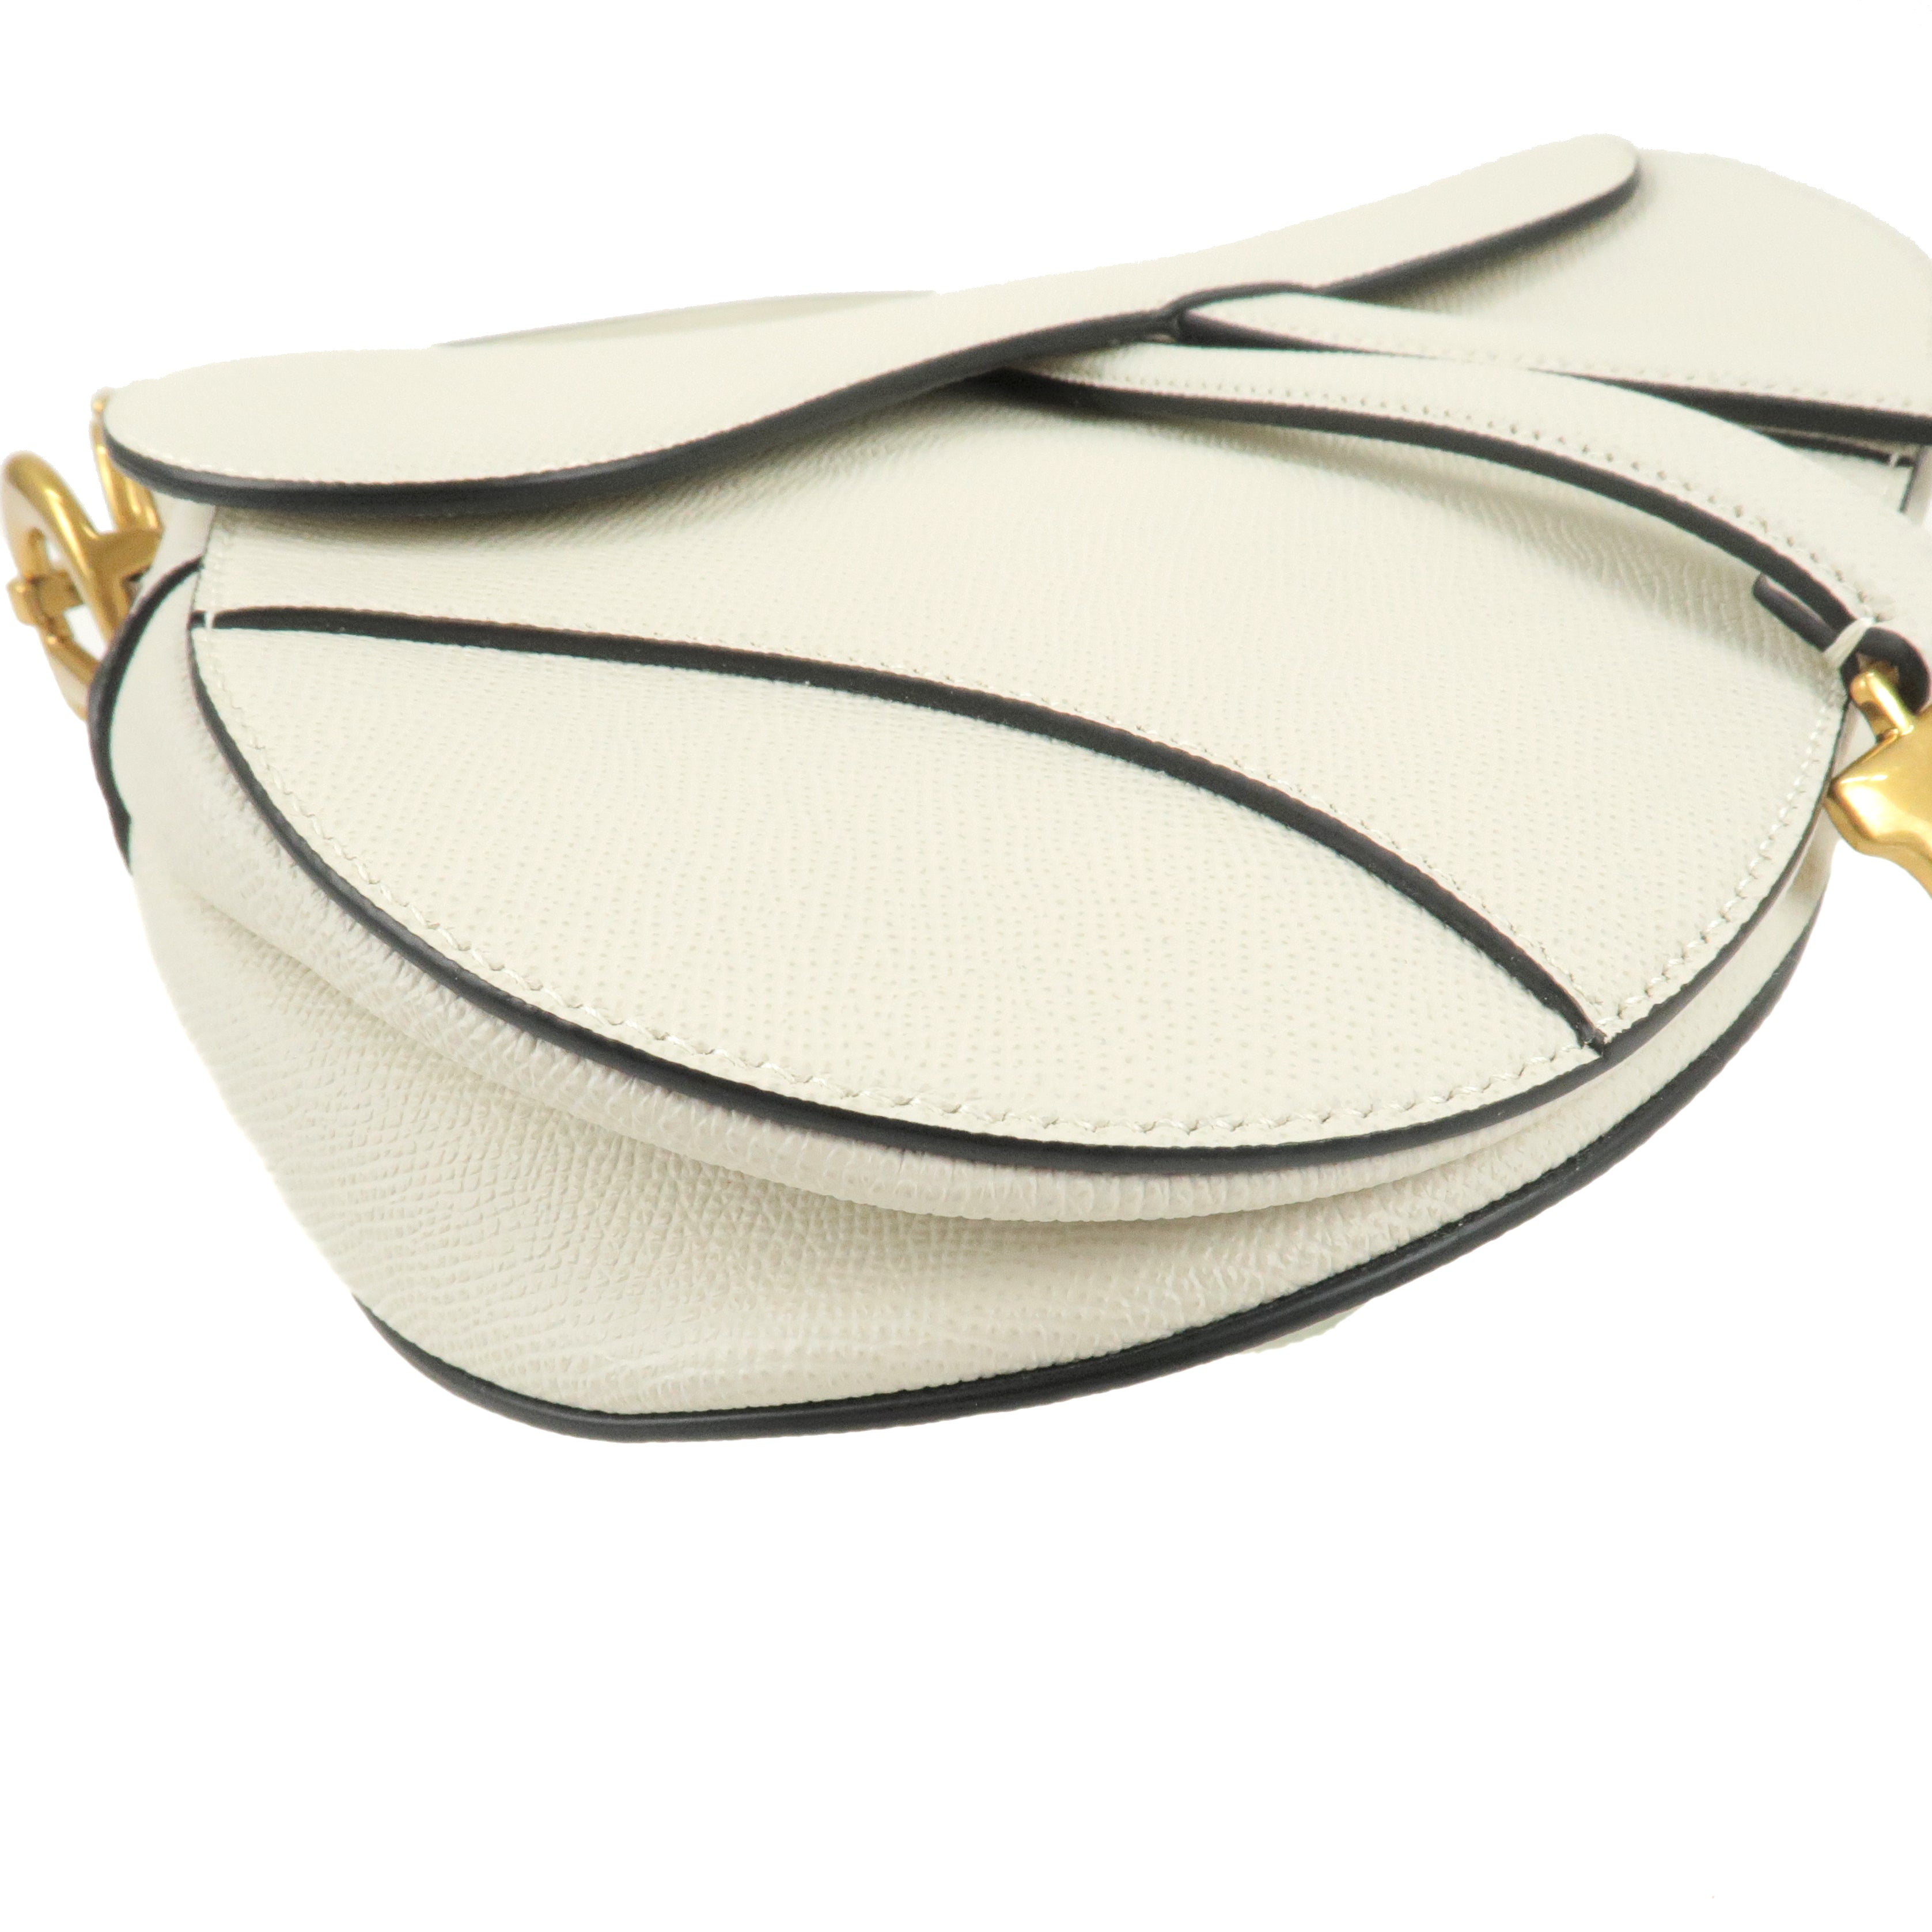 Christian Dior Trotter Saddle Hand Bag Purse | Purses and bags, Purses, Dior